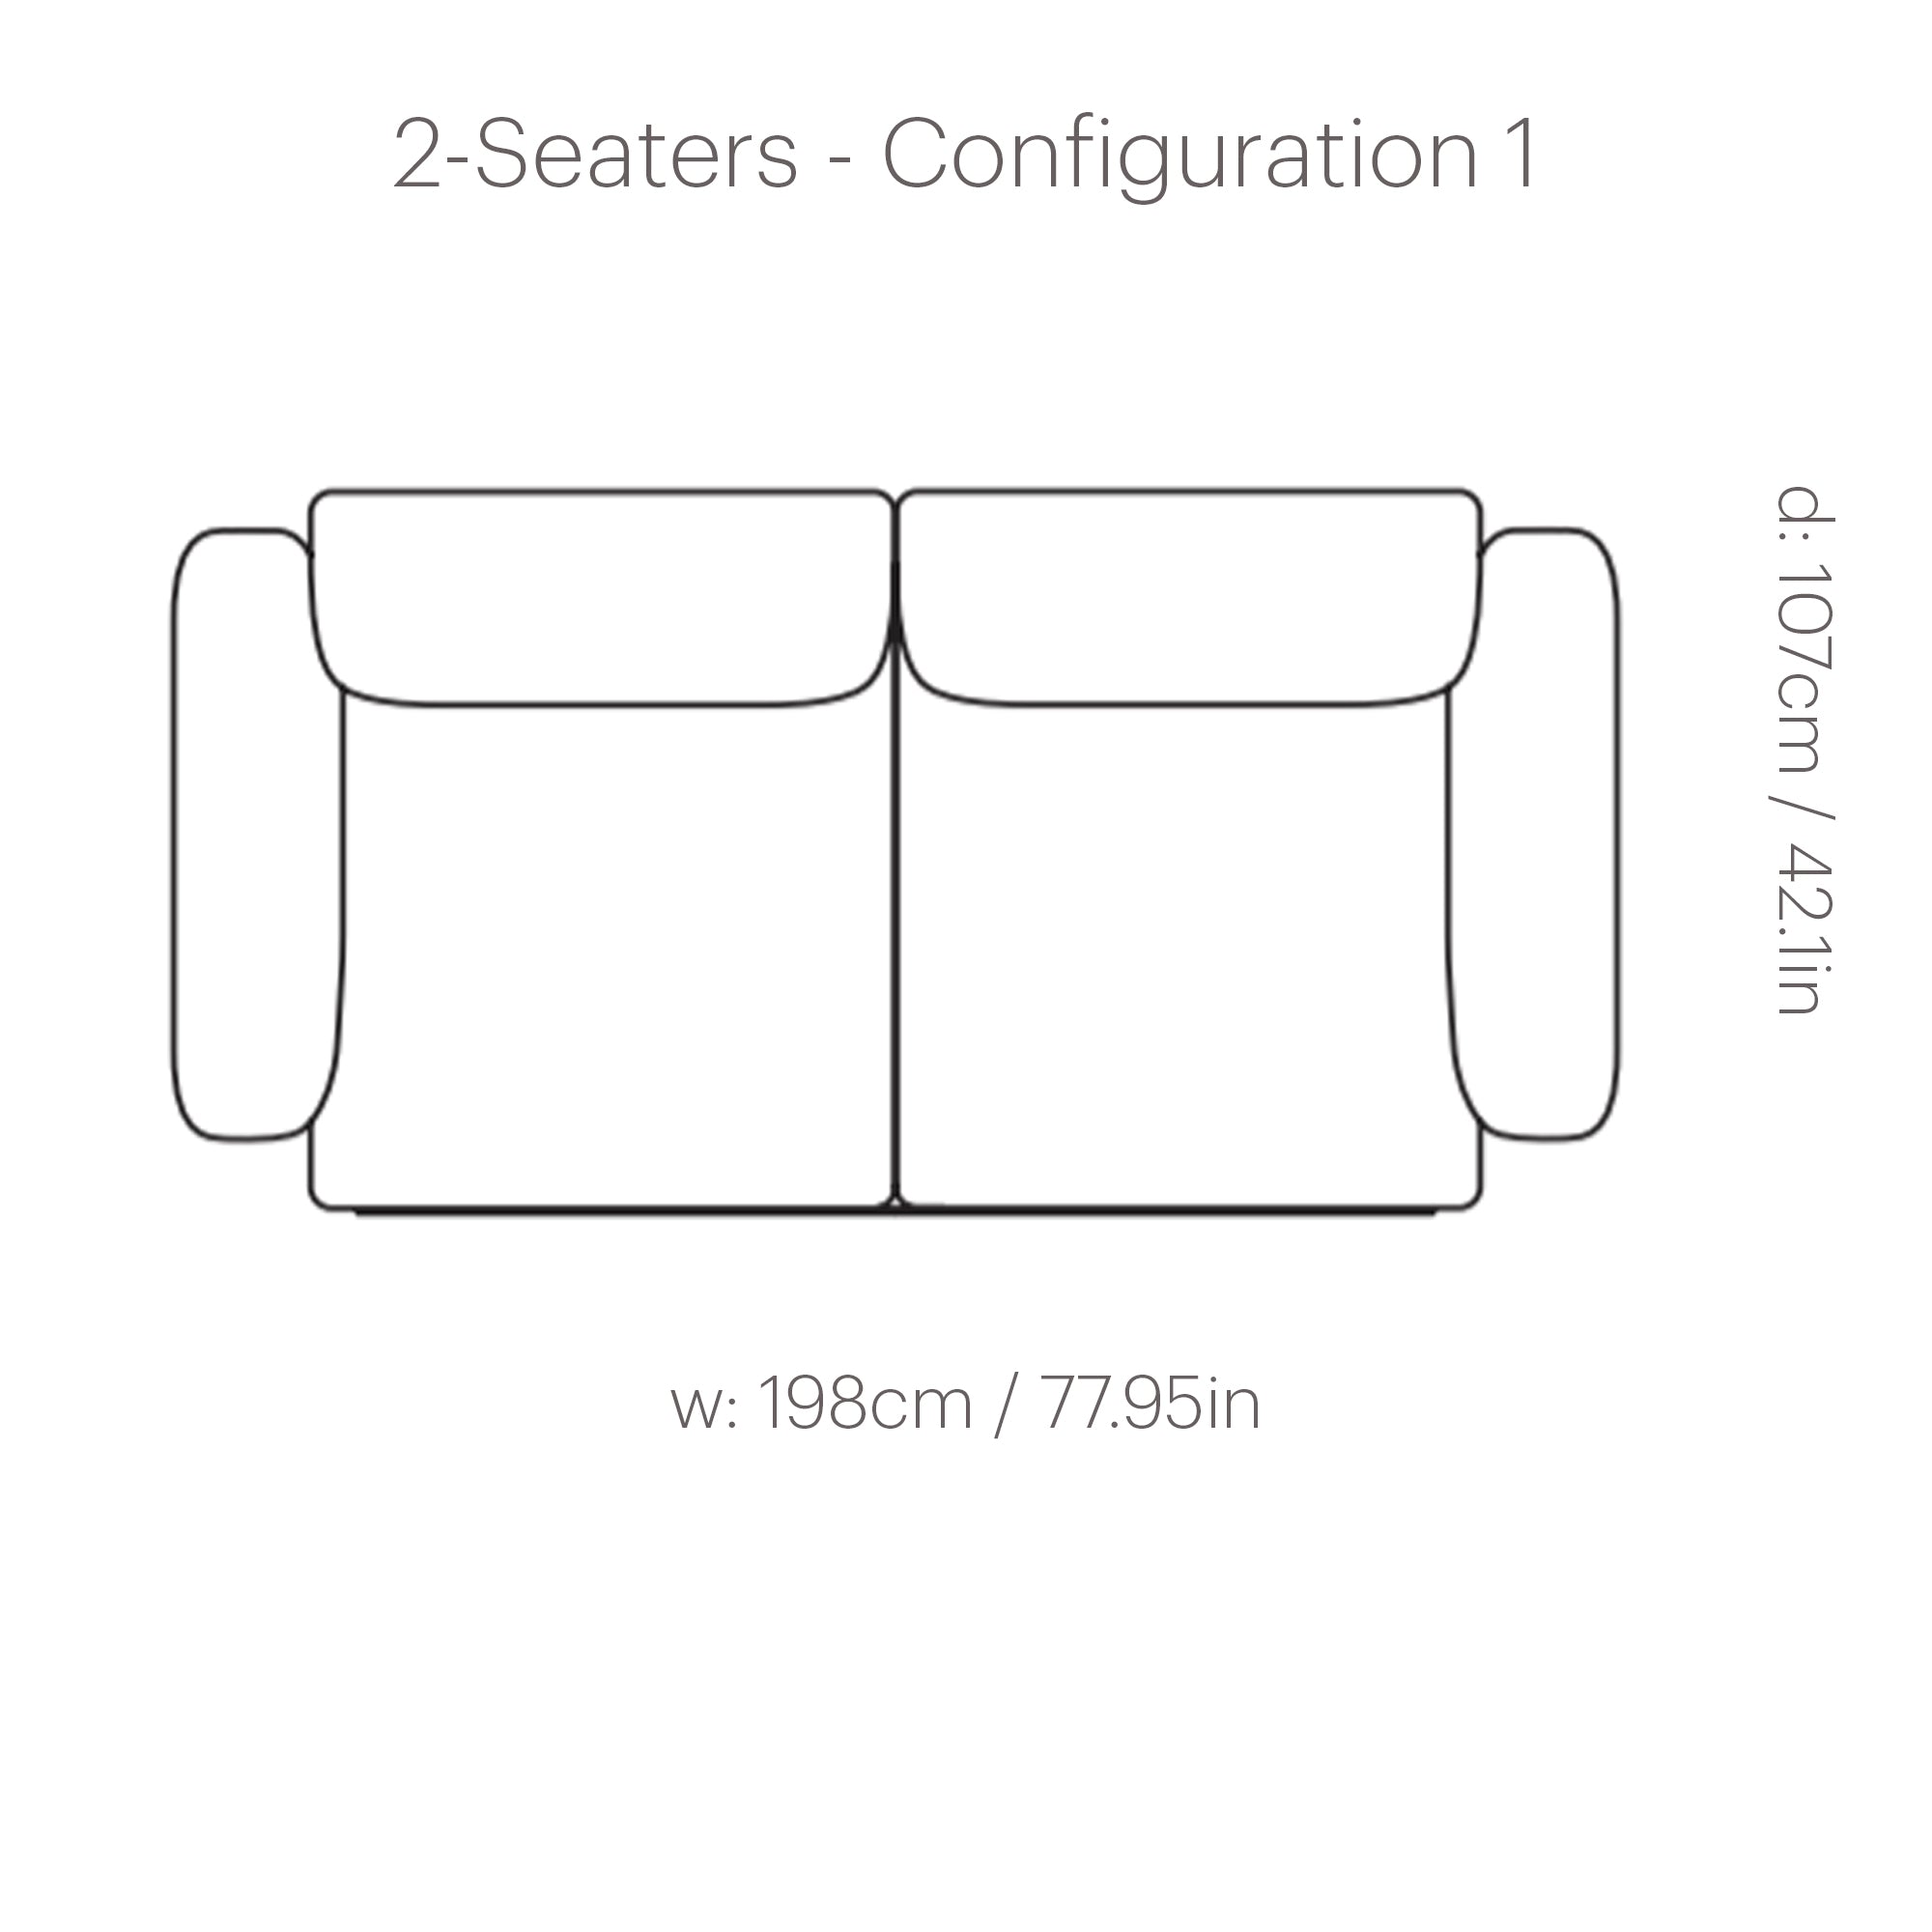 In Situ Modular Sofa: 2 Seater + Configuration 1